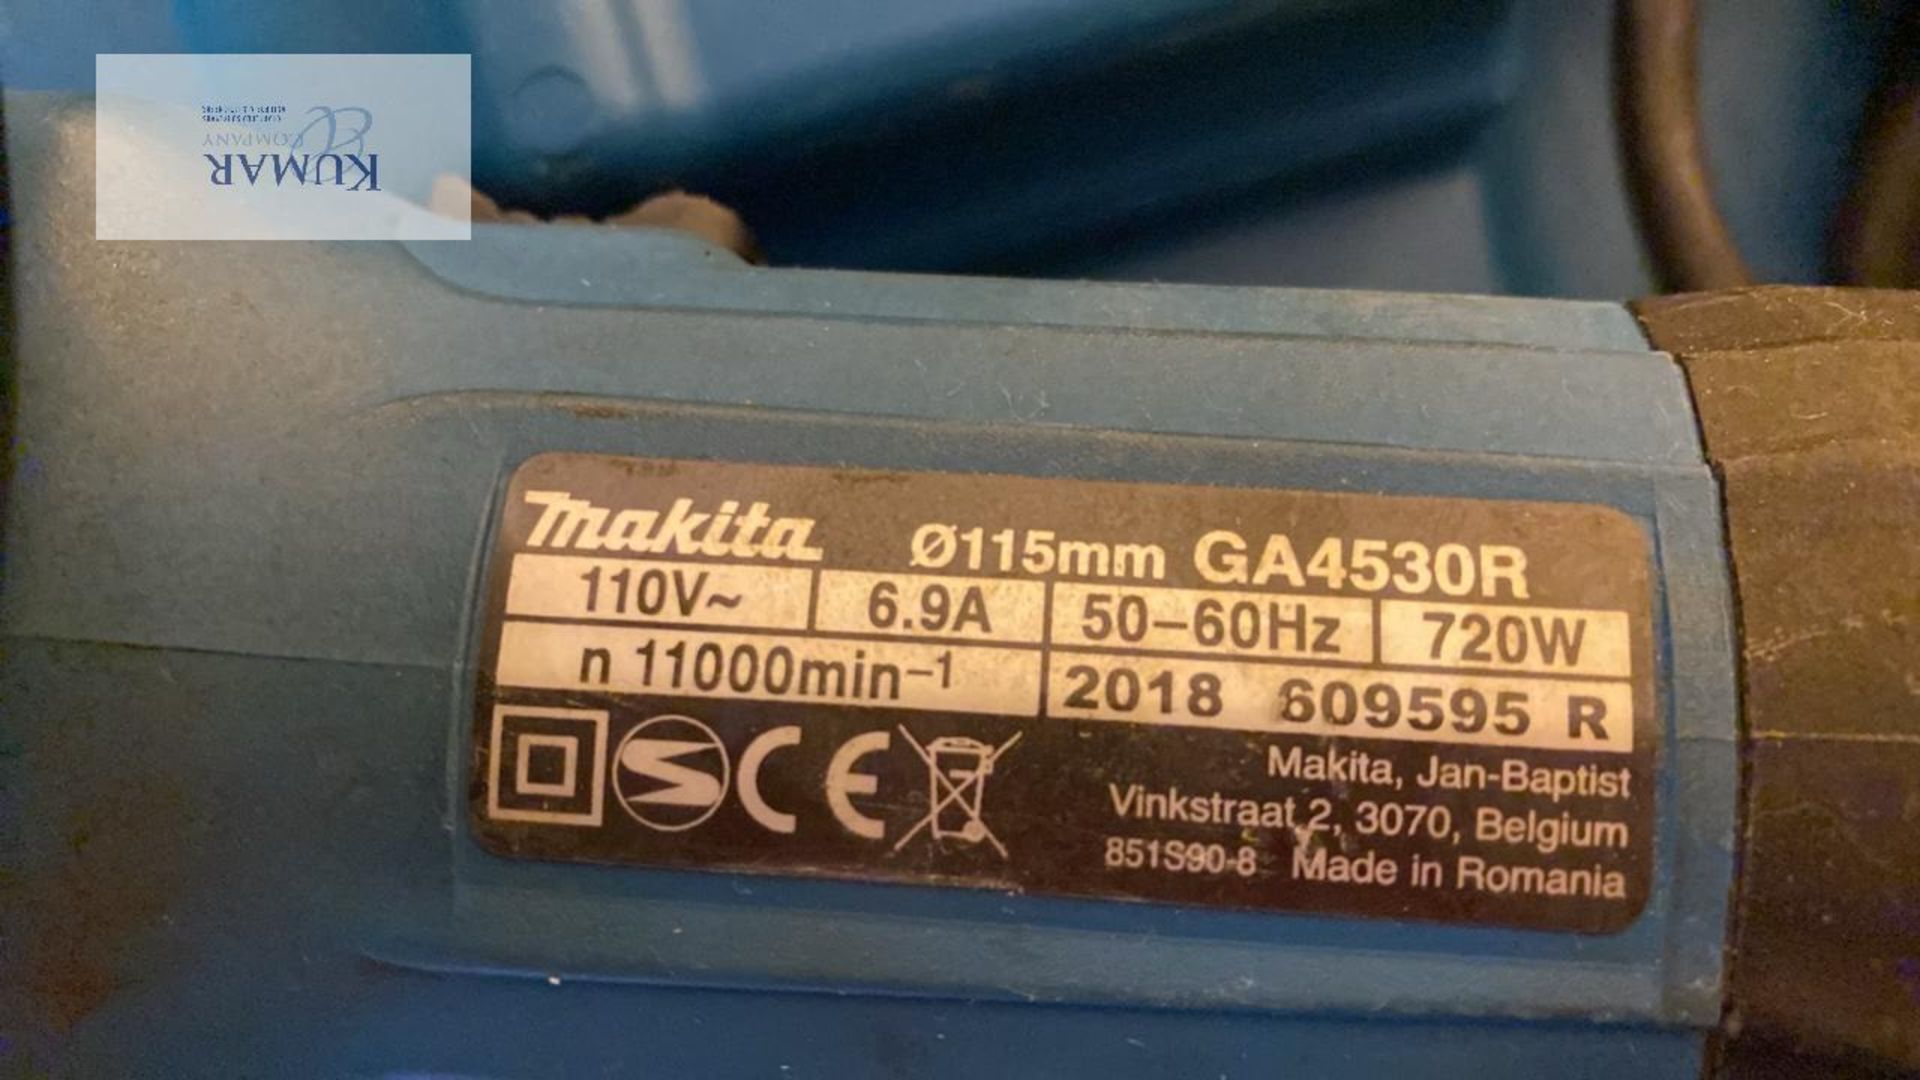 Makita GA4530R 110 Volt Angle Grinder with Carry Case - Bild 5 aus 5